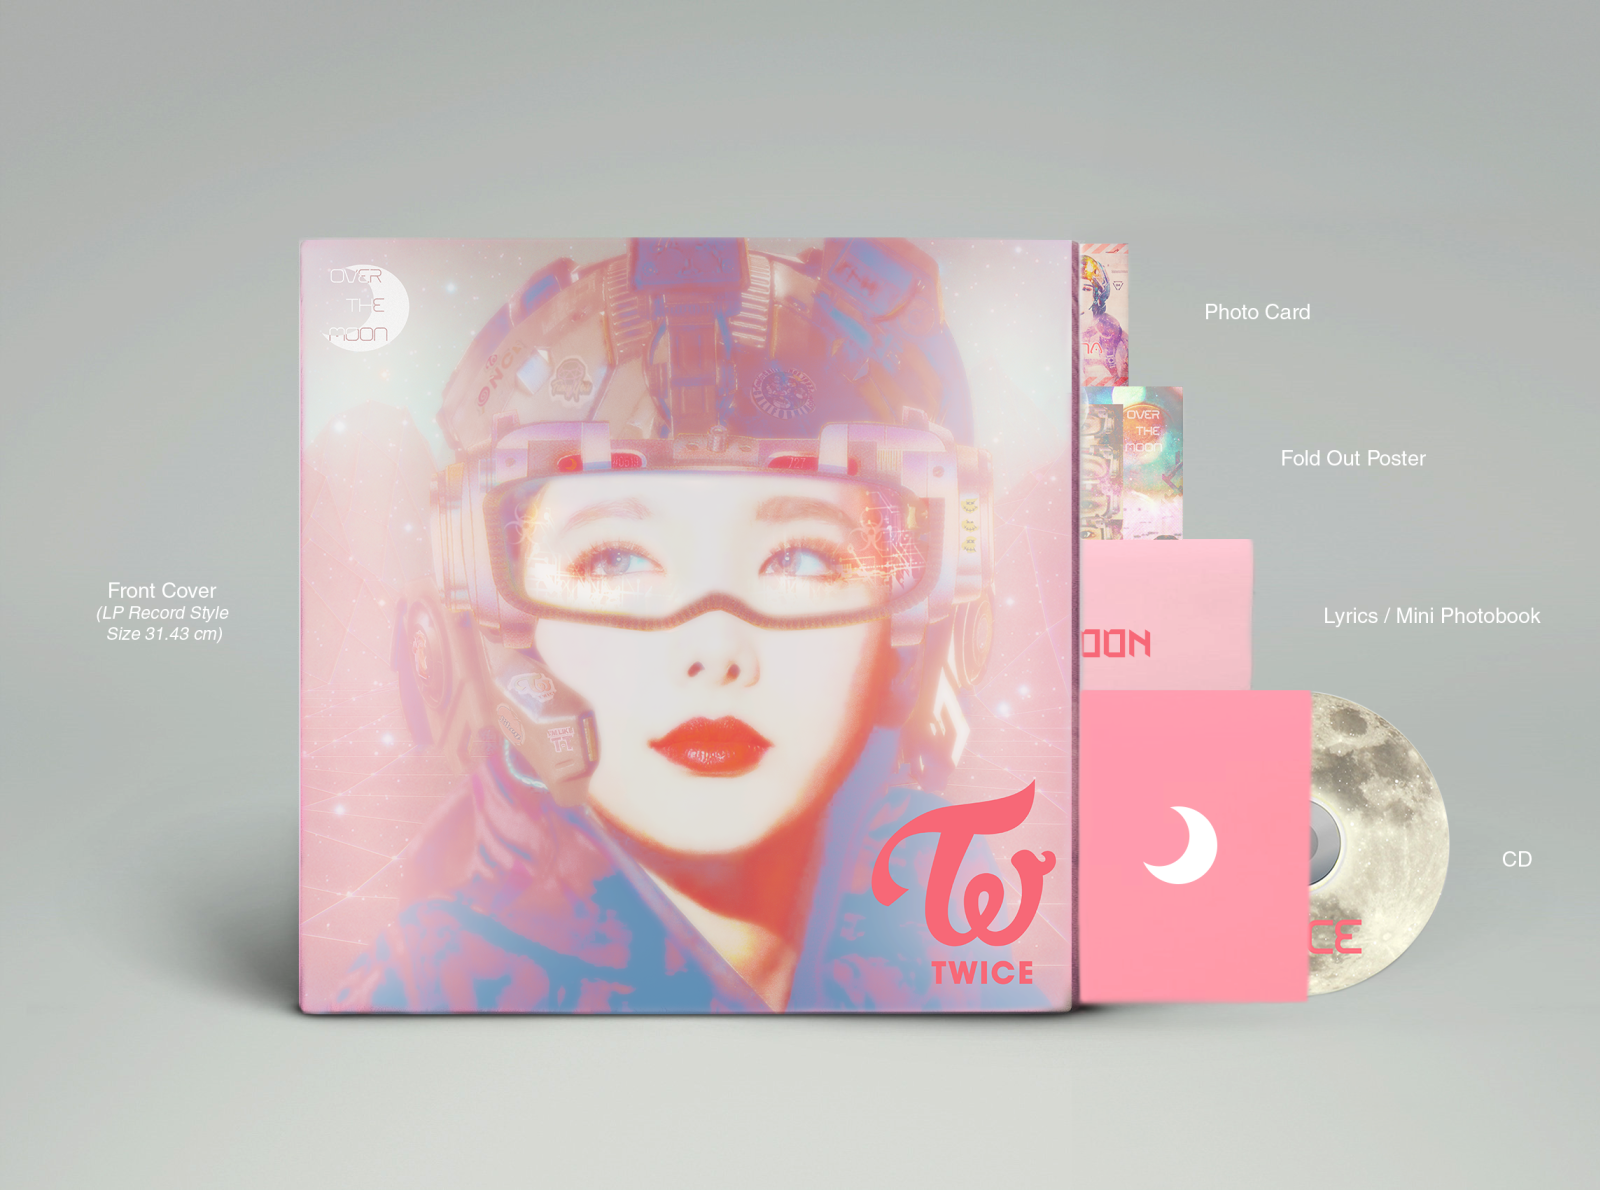 Twice K Pop Album Artwork And Packaging Design By Nate Biller On